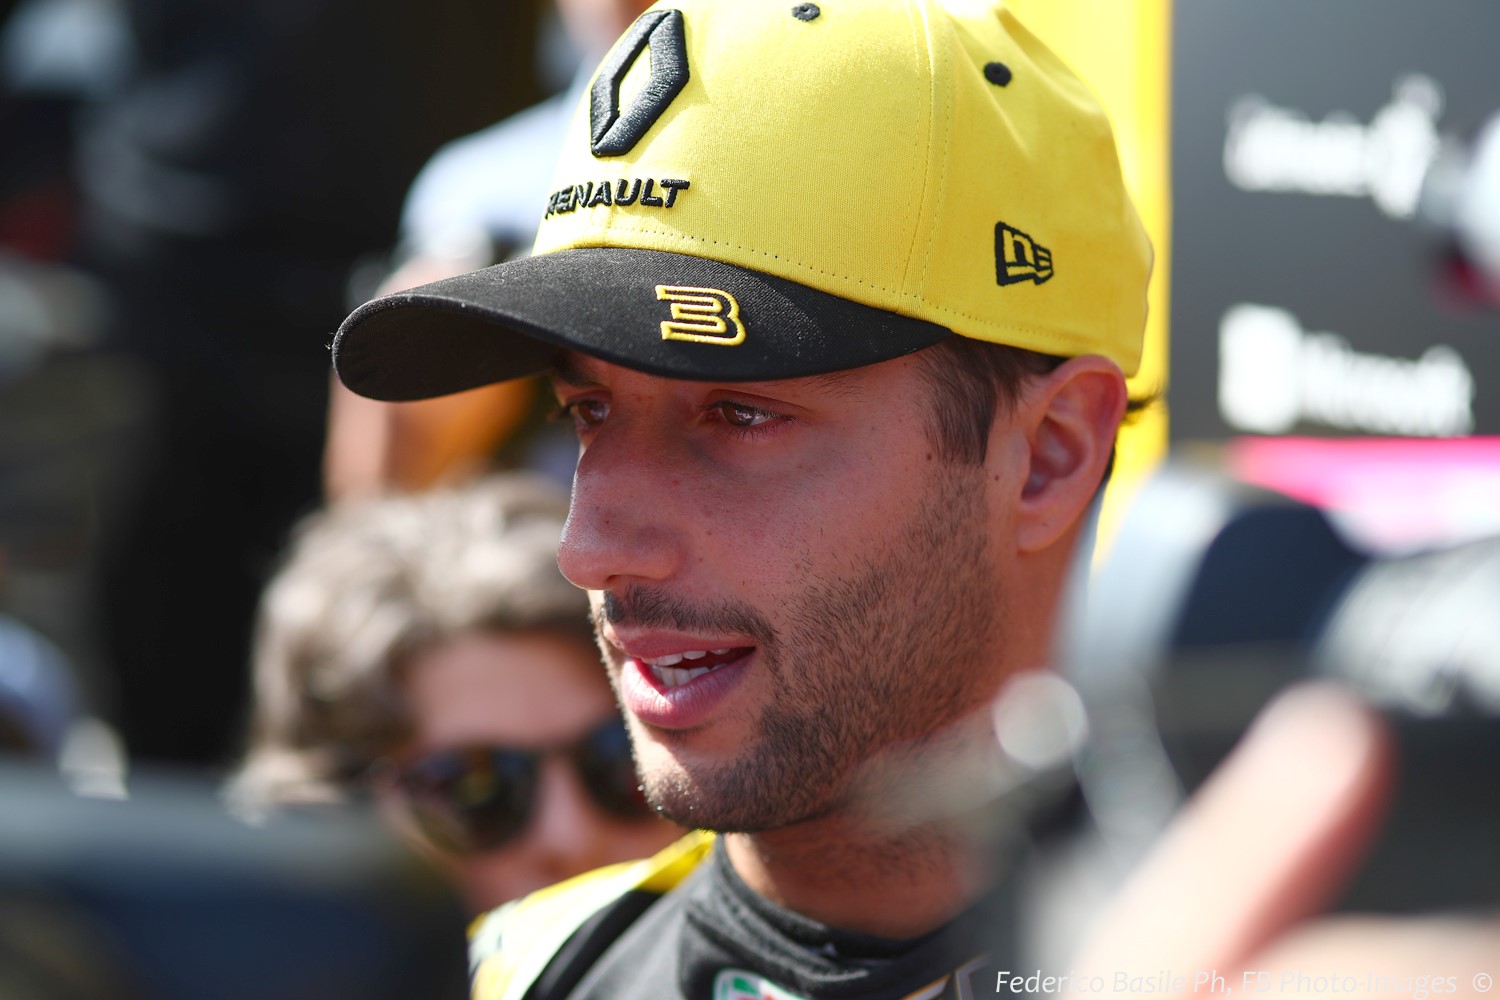 Ricciardo was not smiling on this day